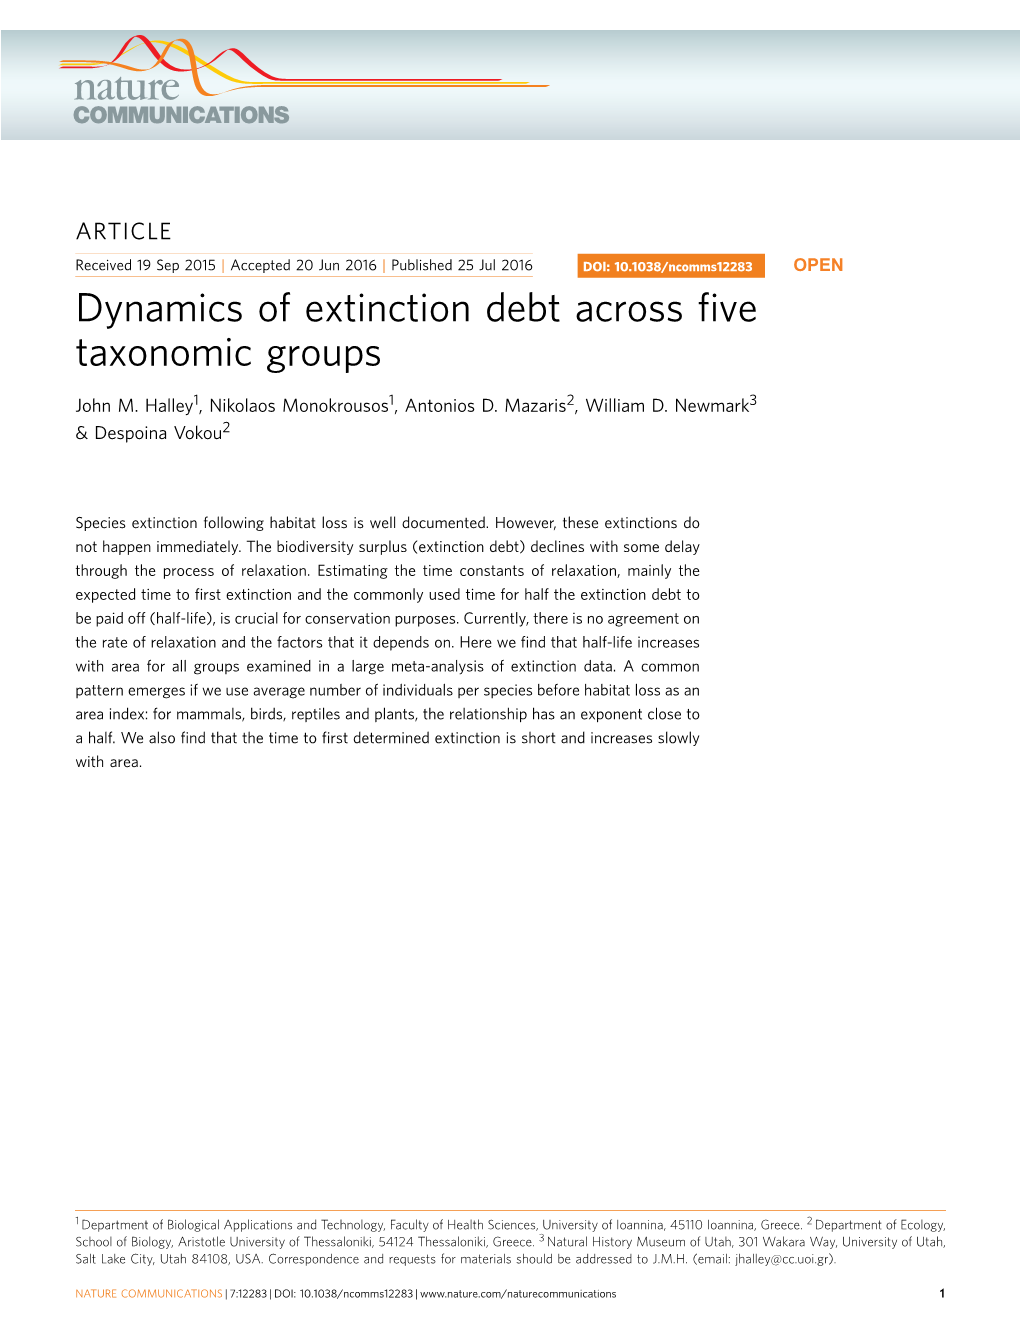 Dynamics of Extinction Debt Across Five Taxonomic Groups